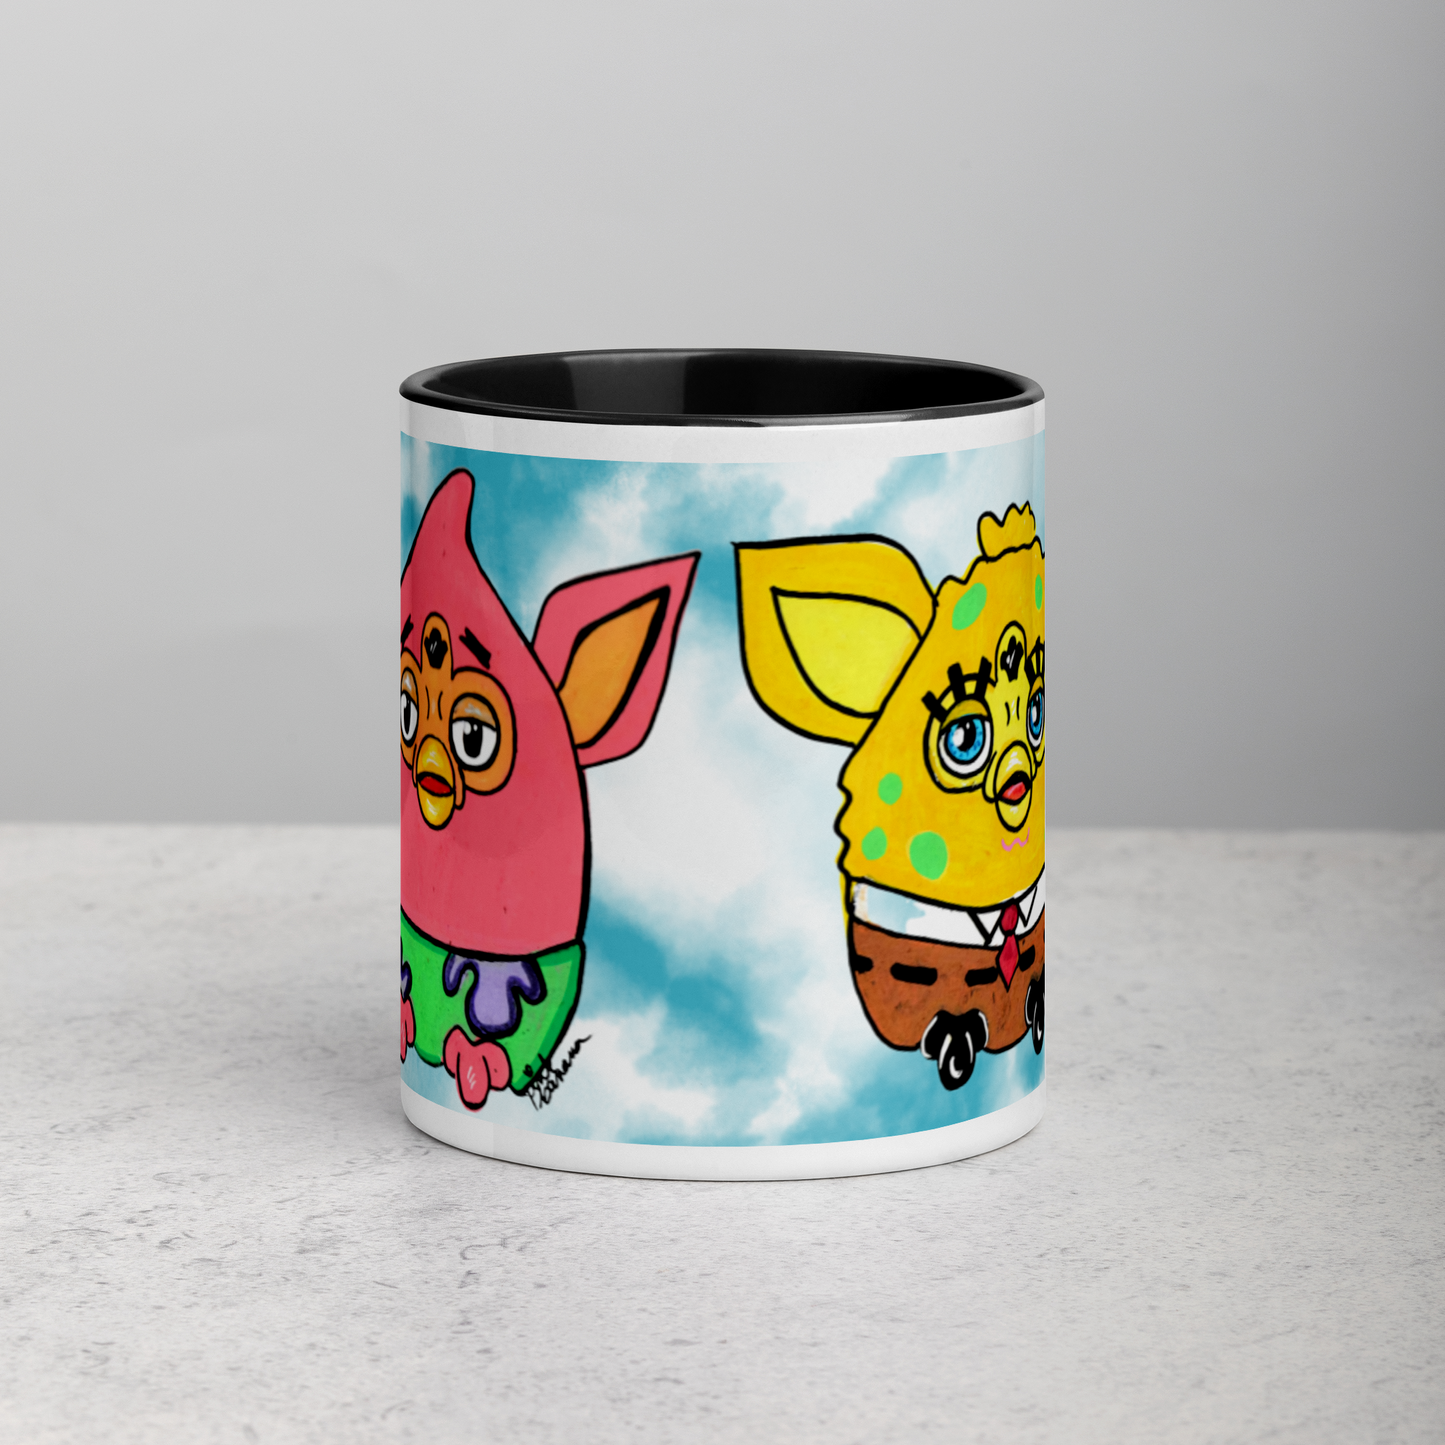 SpongeFURB and Patrick Furby Mug